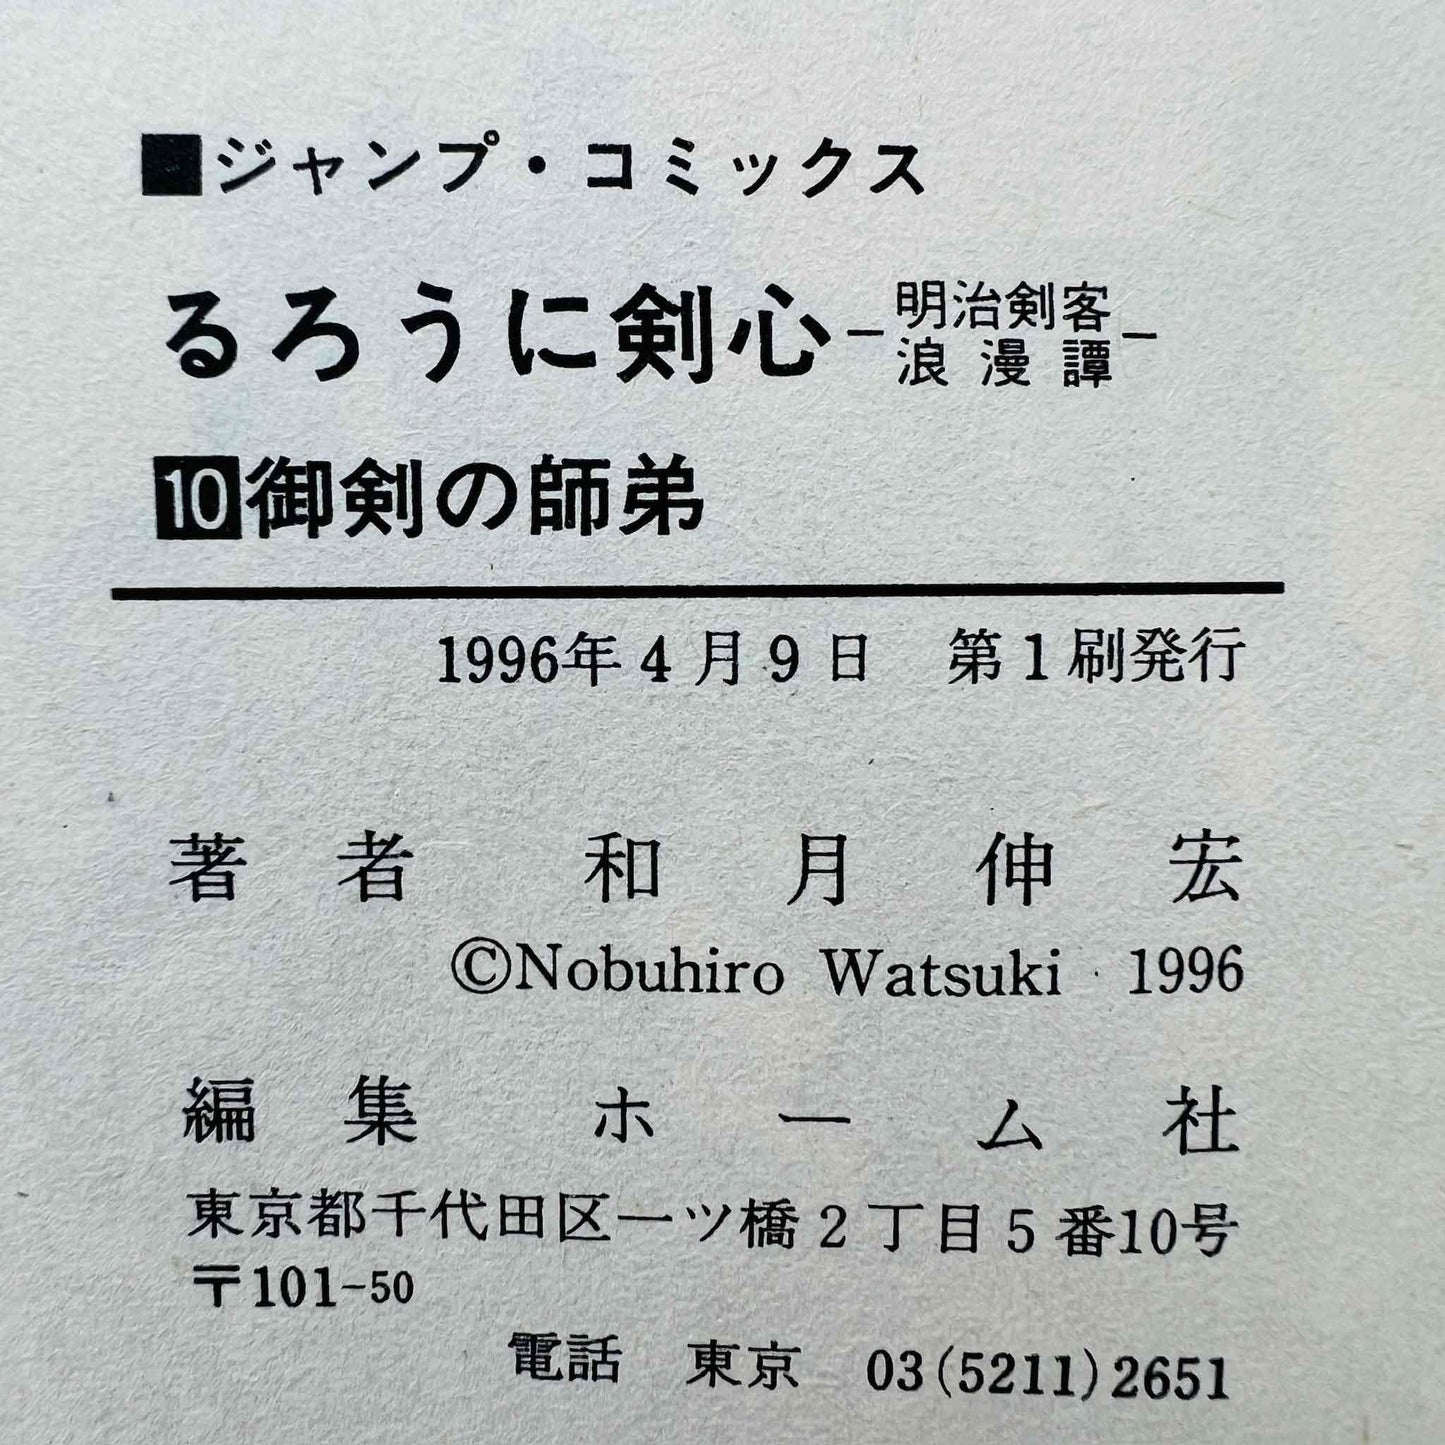 Rurouni Kenshin - Volume 10 - 1stPrint.net - 1st First Print Edition Manga Store - M-KENSH-10-001